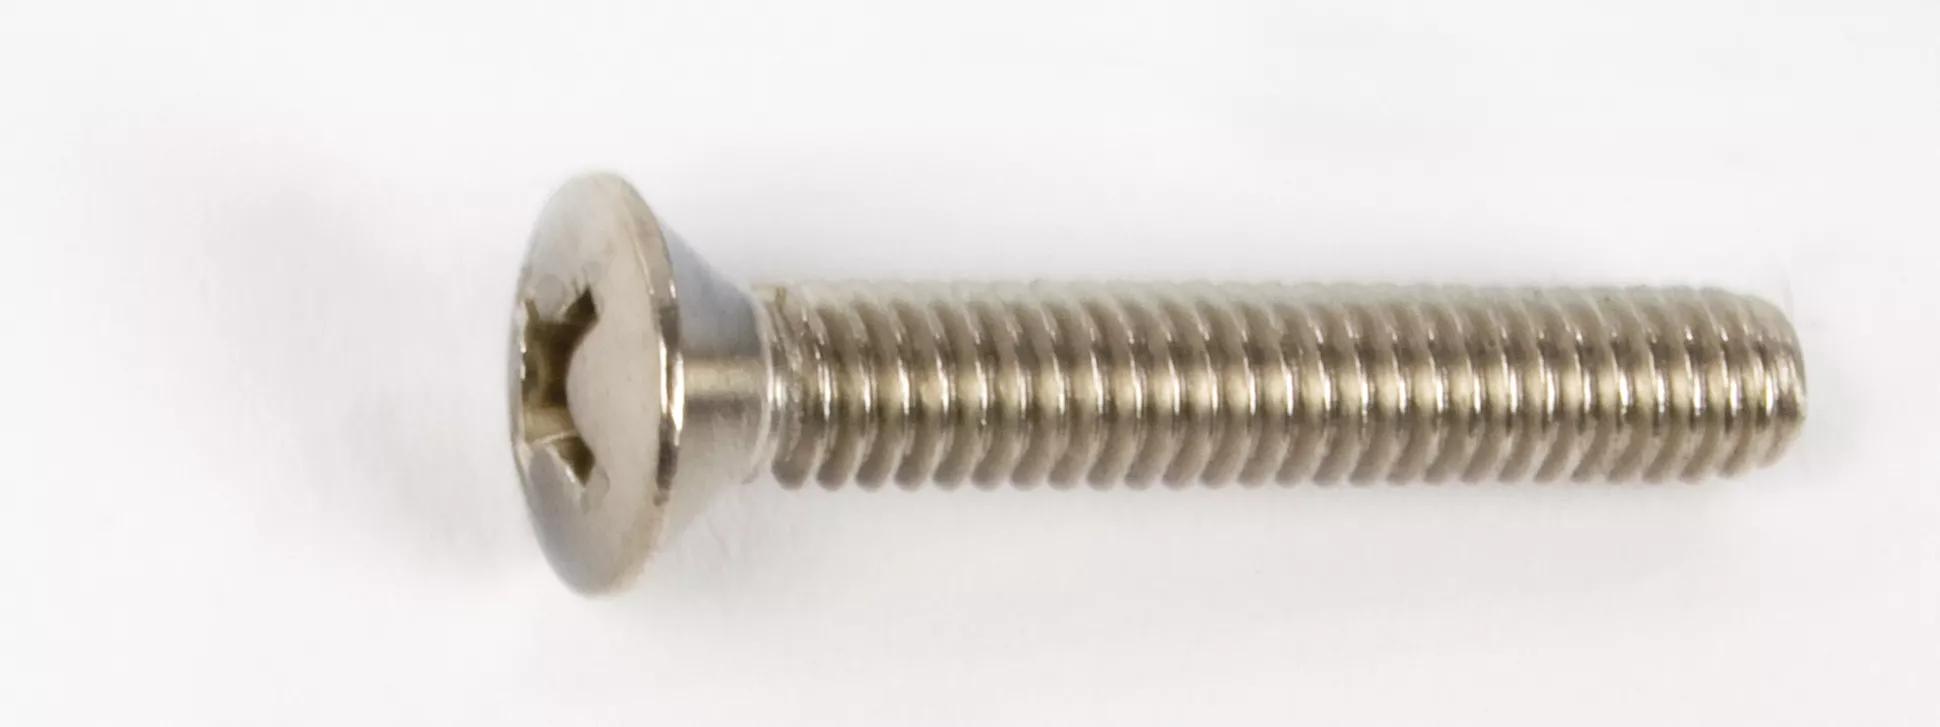 #10-24 x 3/8" 18-8 Stainless Steel Phillips Oval Head Machine Screw